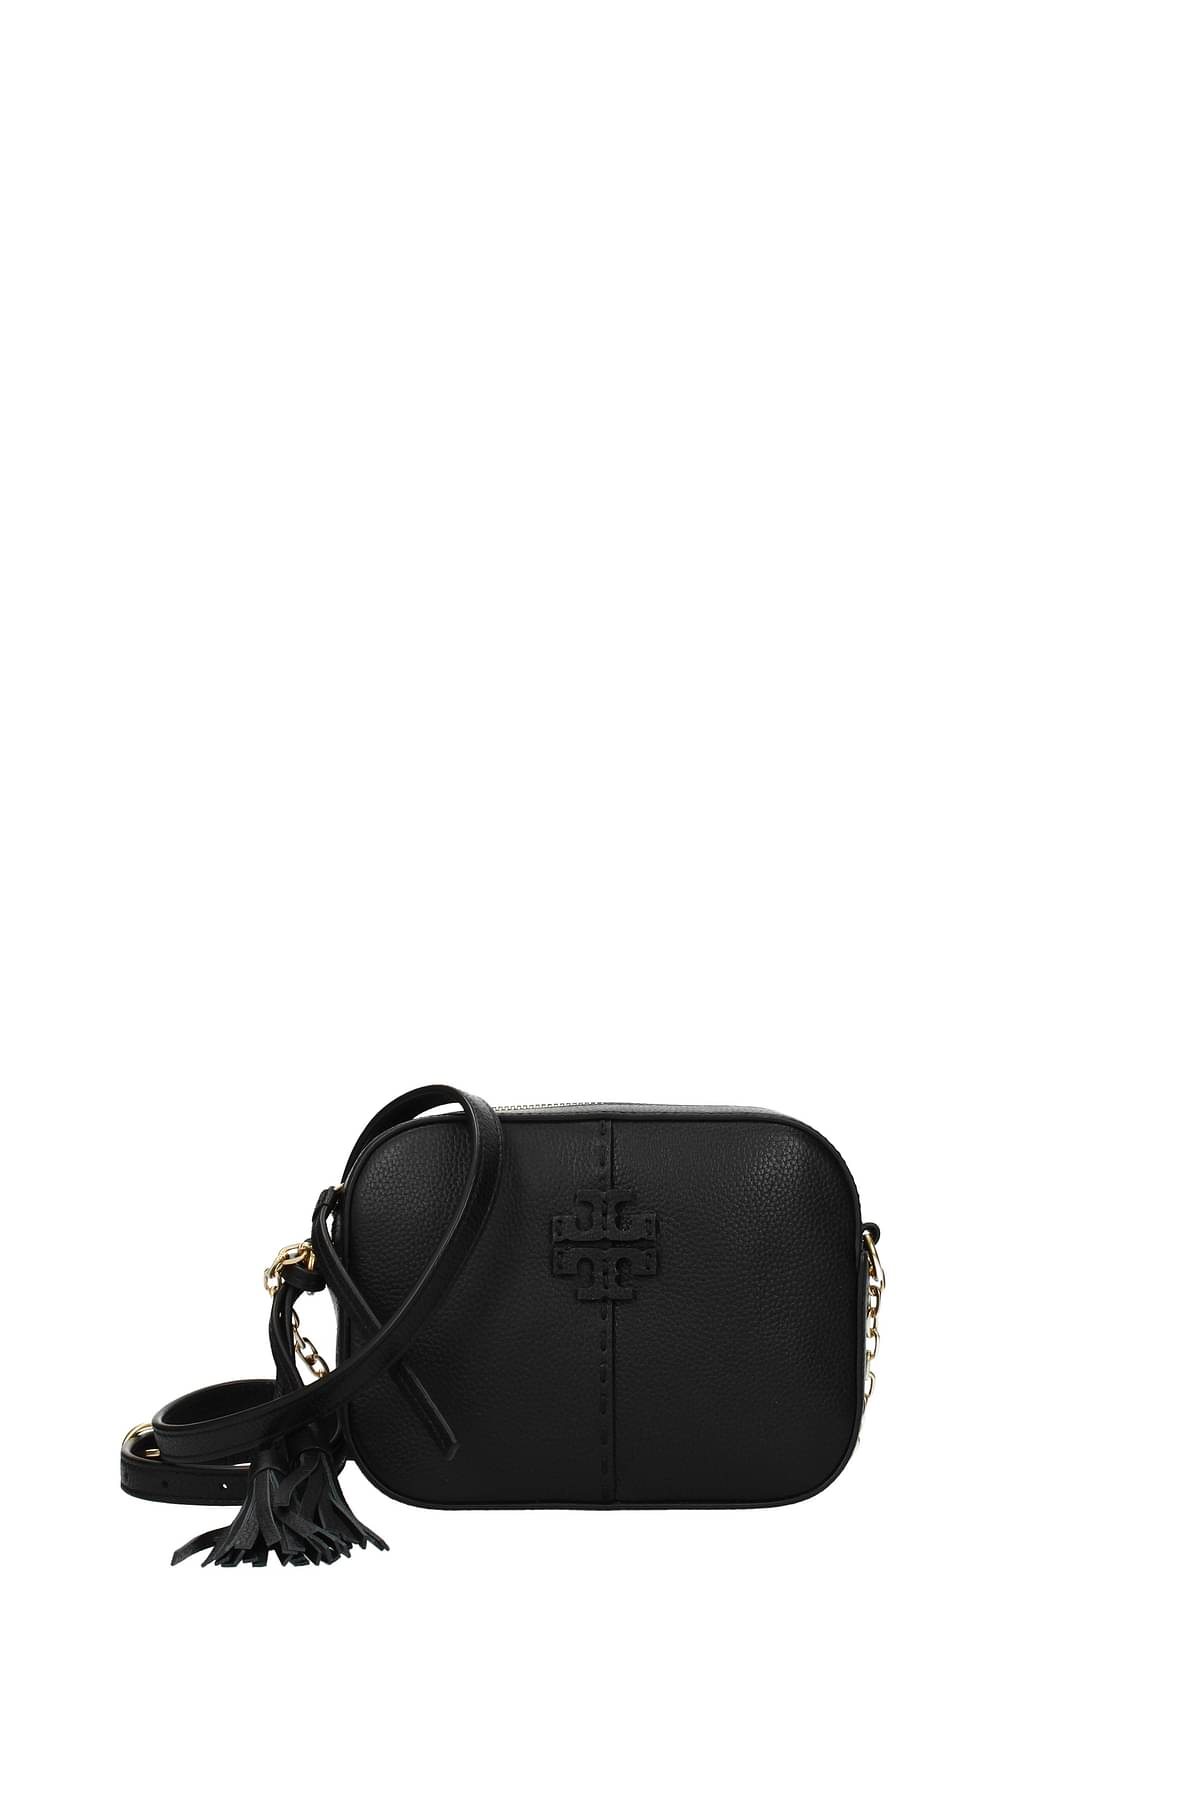 NWT Tory Burch mcgraw crossbody bag black with gold hardware